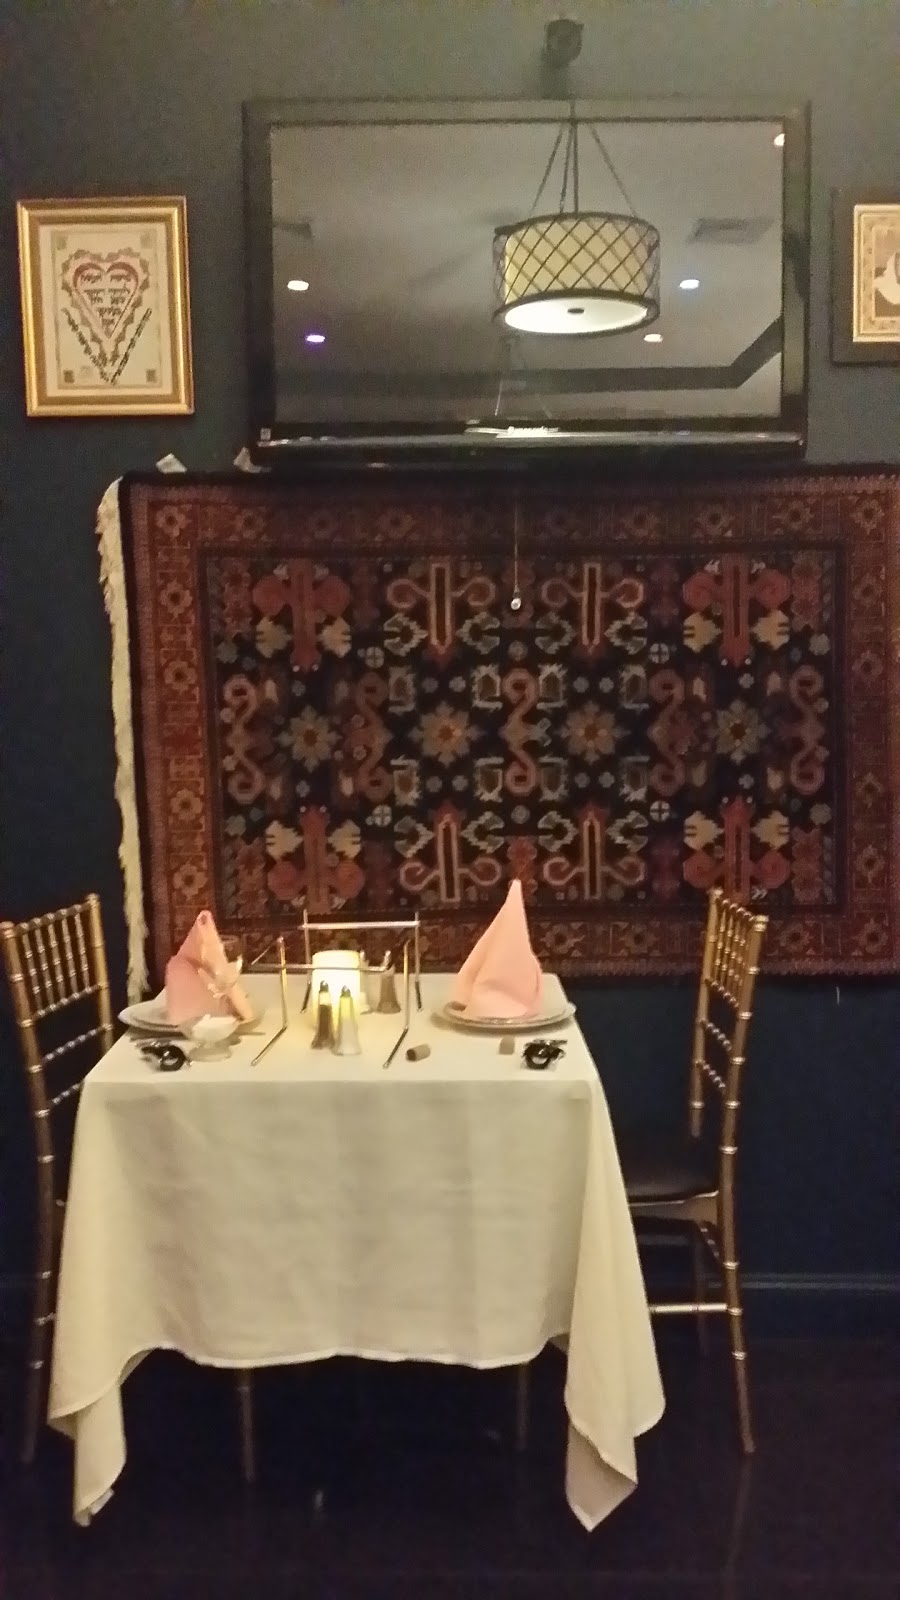 Photo of King Solomon Glatt Kosher Catering & Restaurant in Kings County City, New York, United States - 7 Picture of Restaurant, Food, Point of interest, Establishment